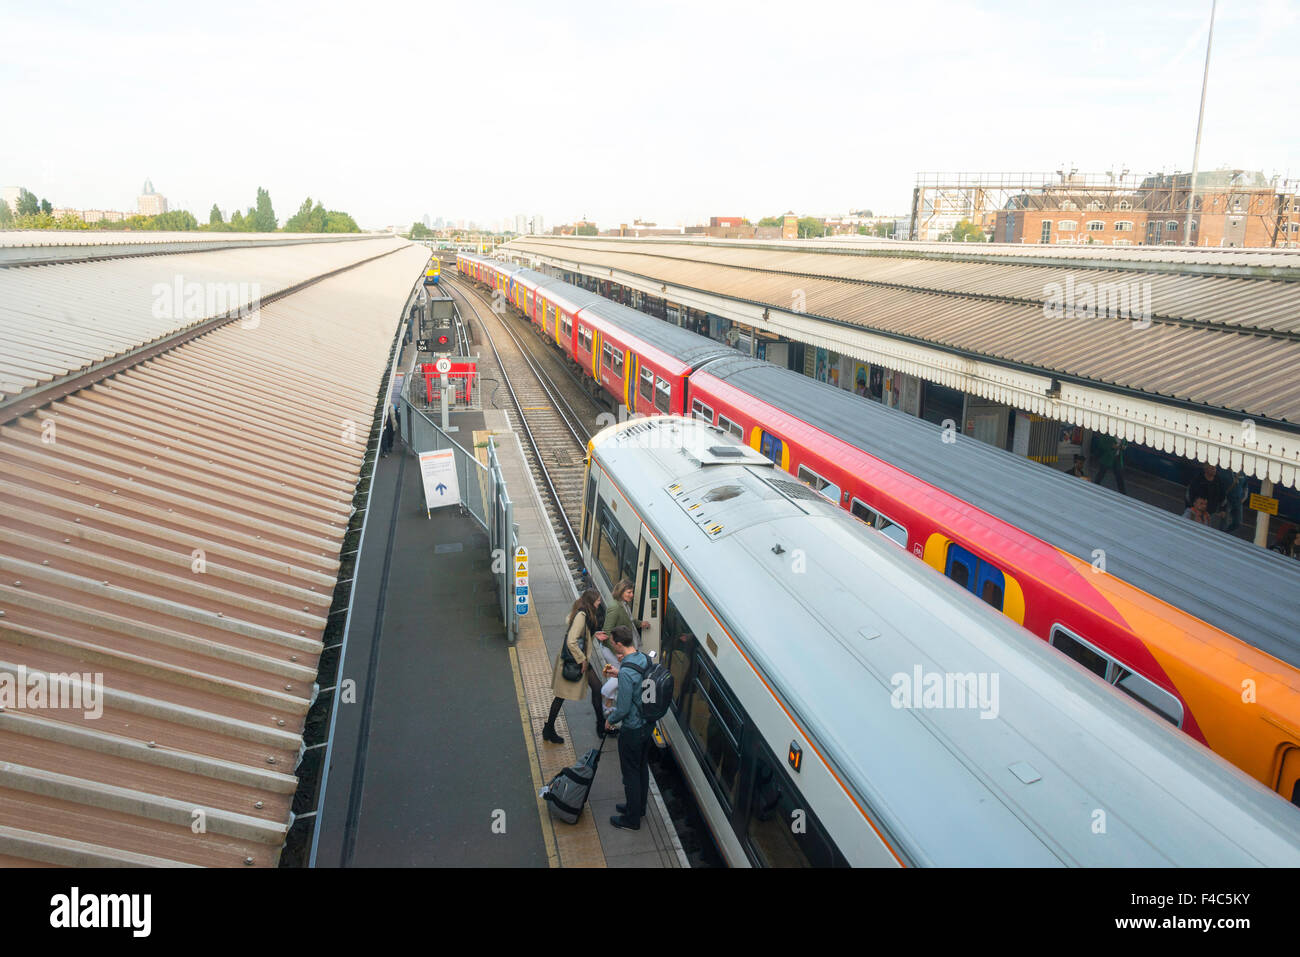 Trains on platform at Clapham Junction Railway Station, Battersea, London Borough of Wandsworth, London, England, United Kingdom Stock Photo